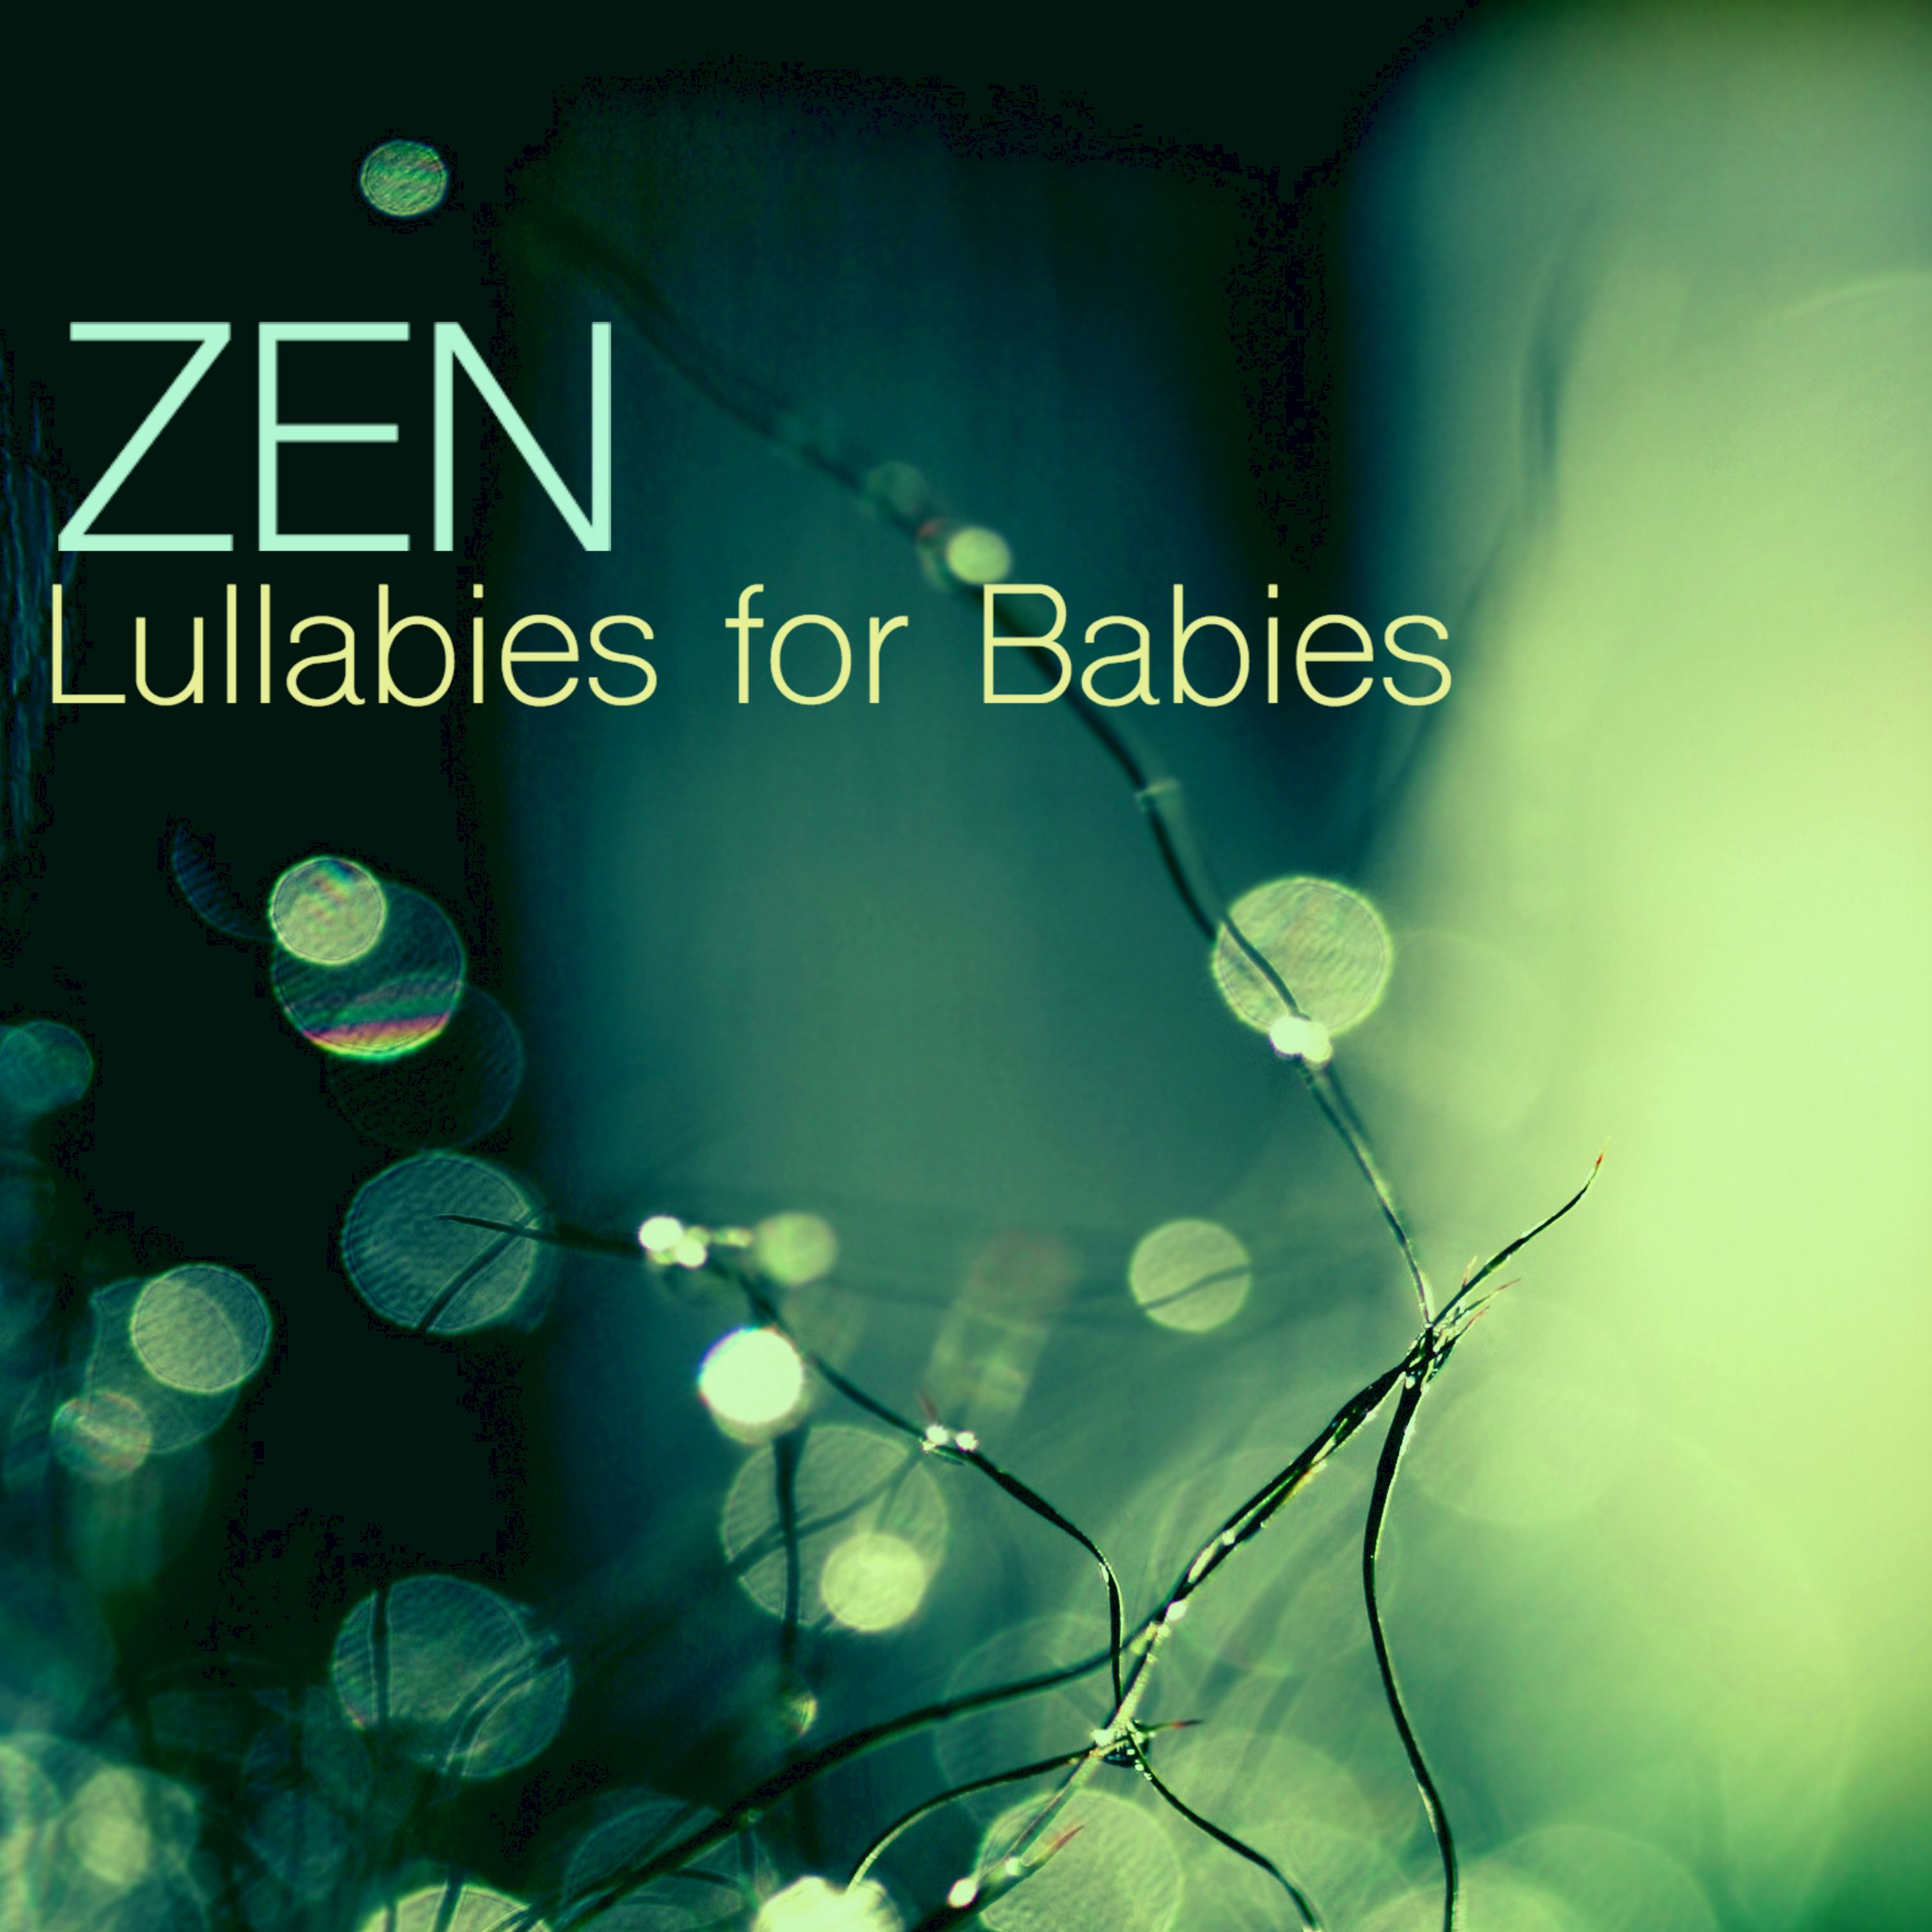 Zen Lullabies for Babies - Newborn & Toddler Gentle Sleep Music Lullaby Collection